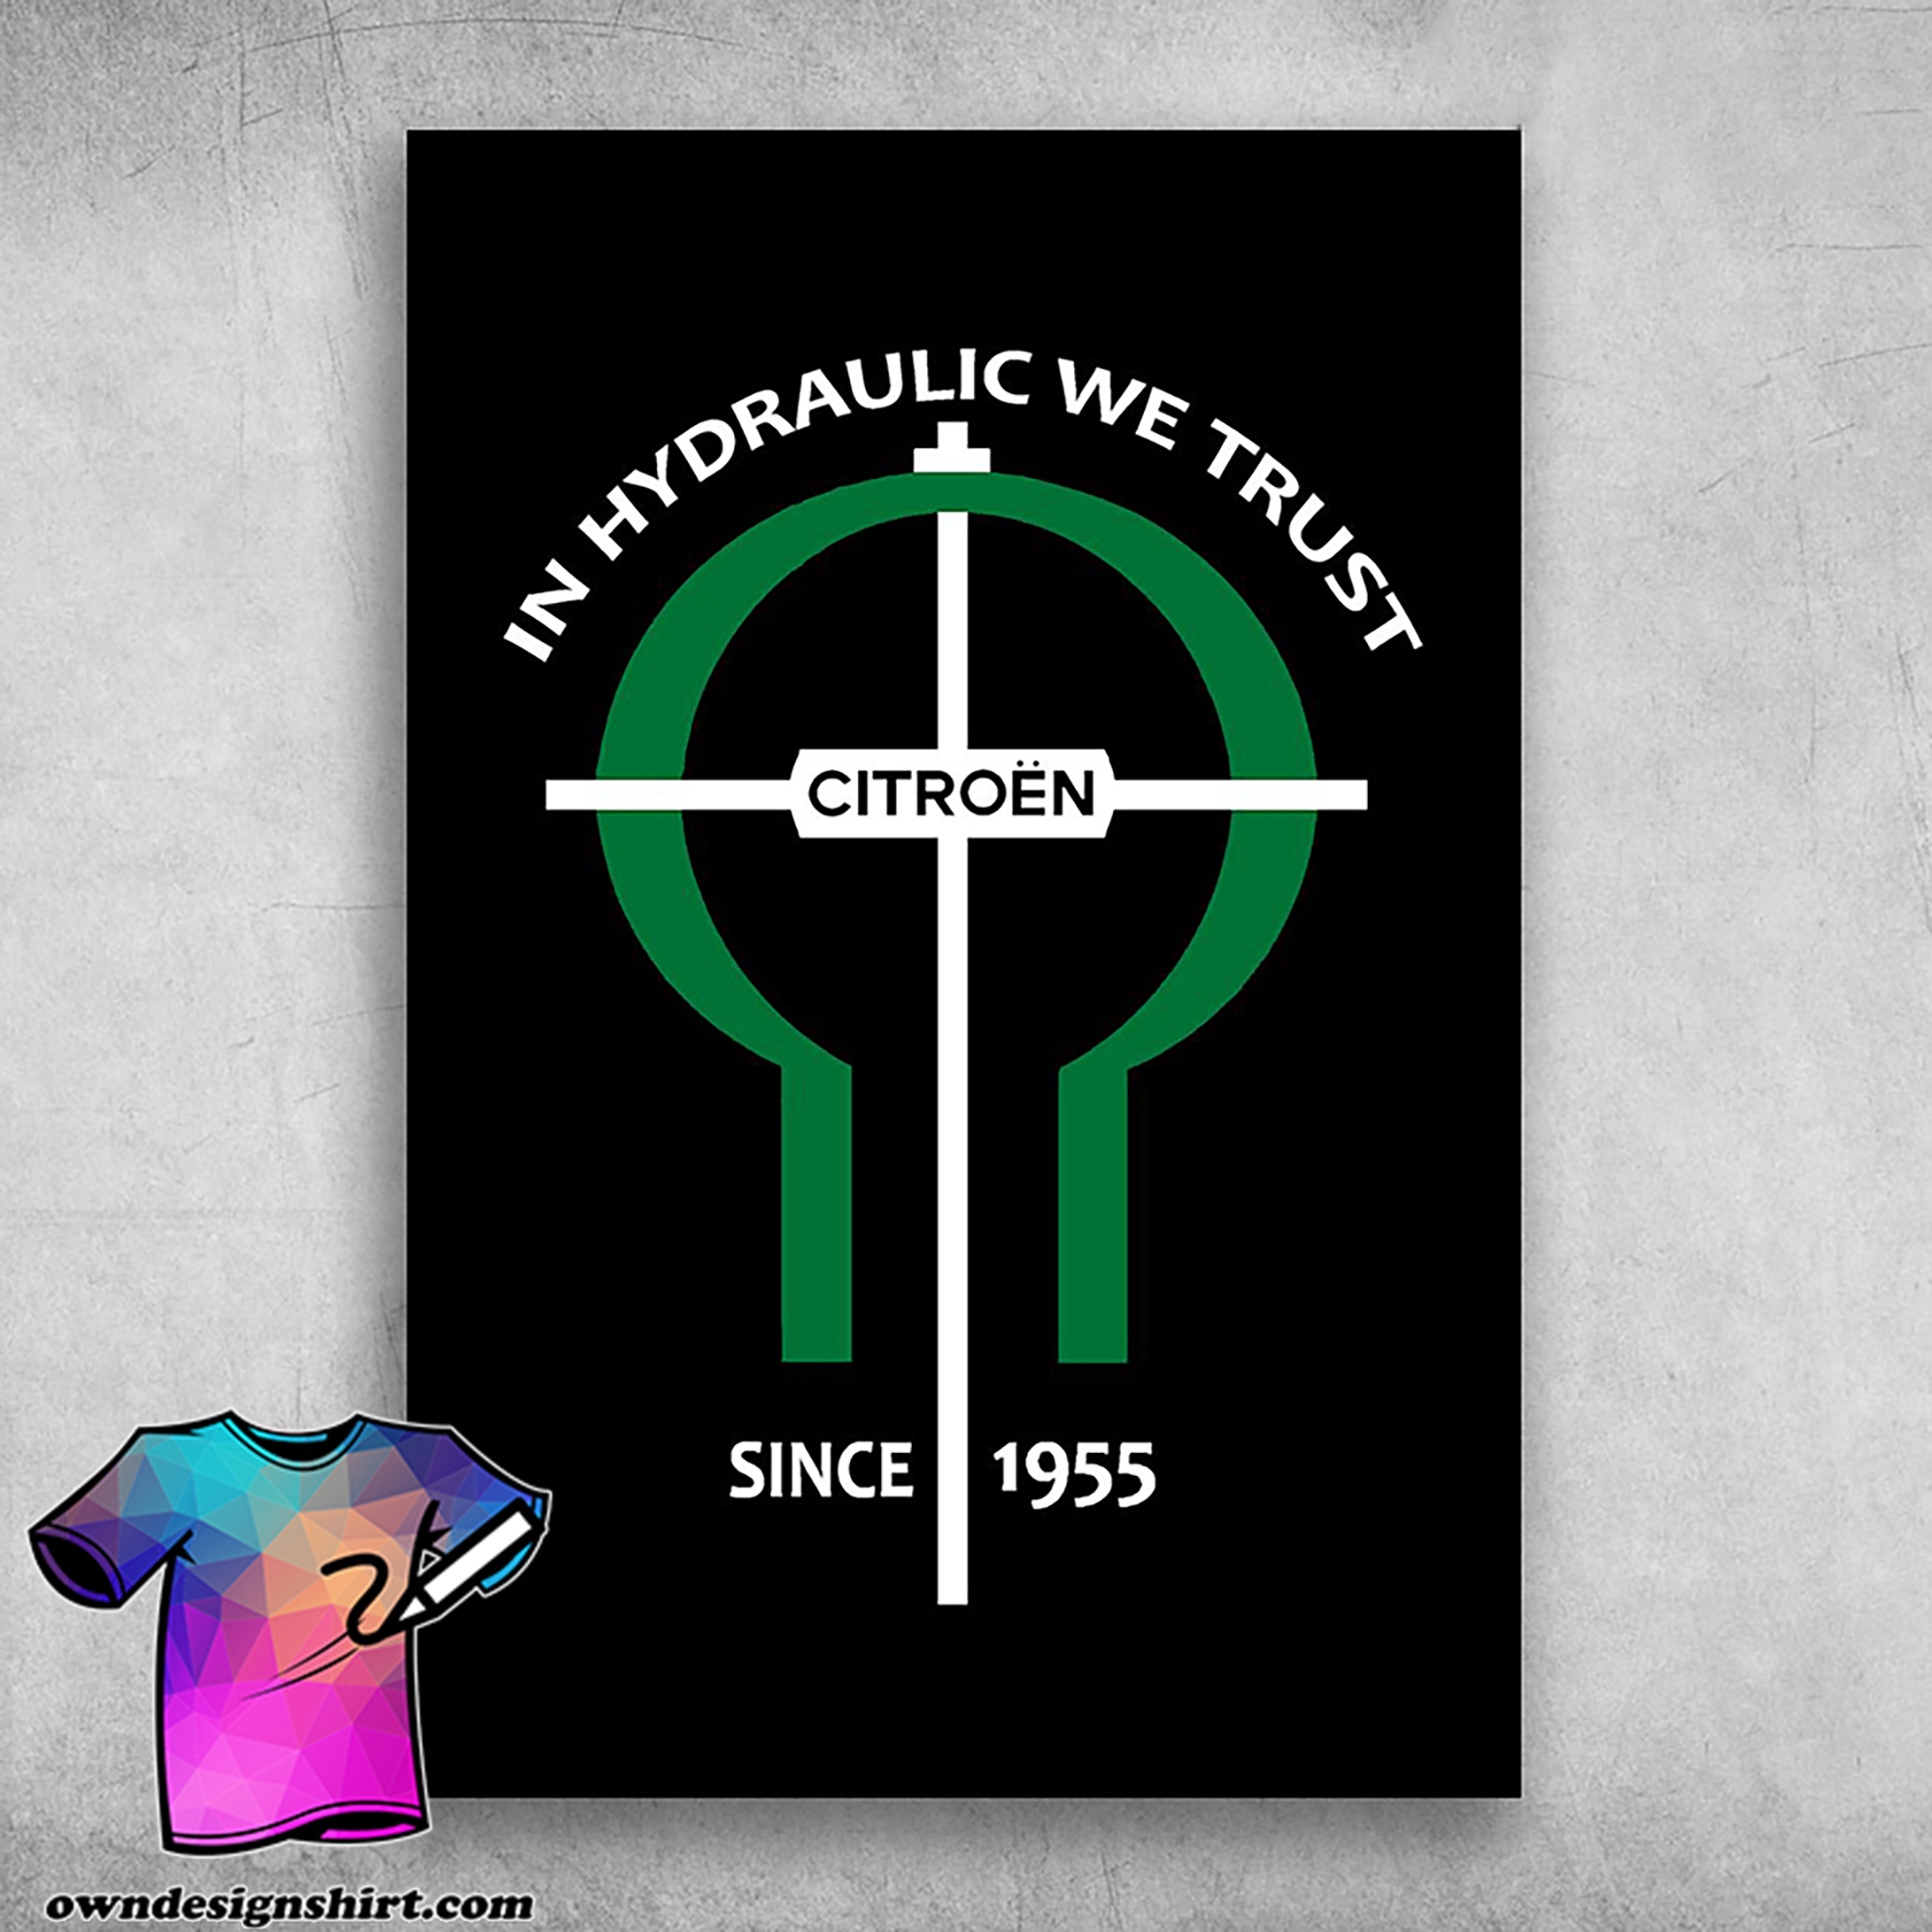 Hydropneumatic lovers in hydraulic we trust citroen since 1955 poster